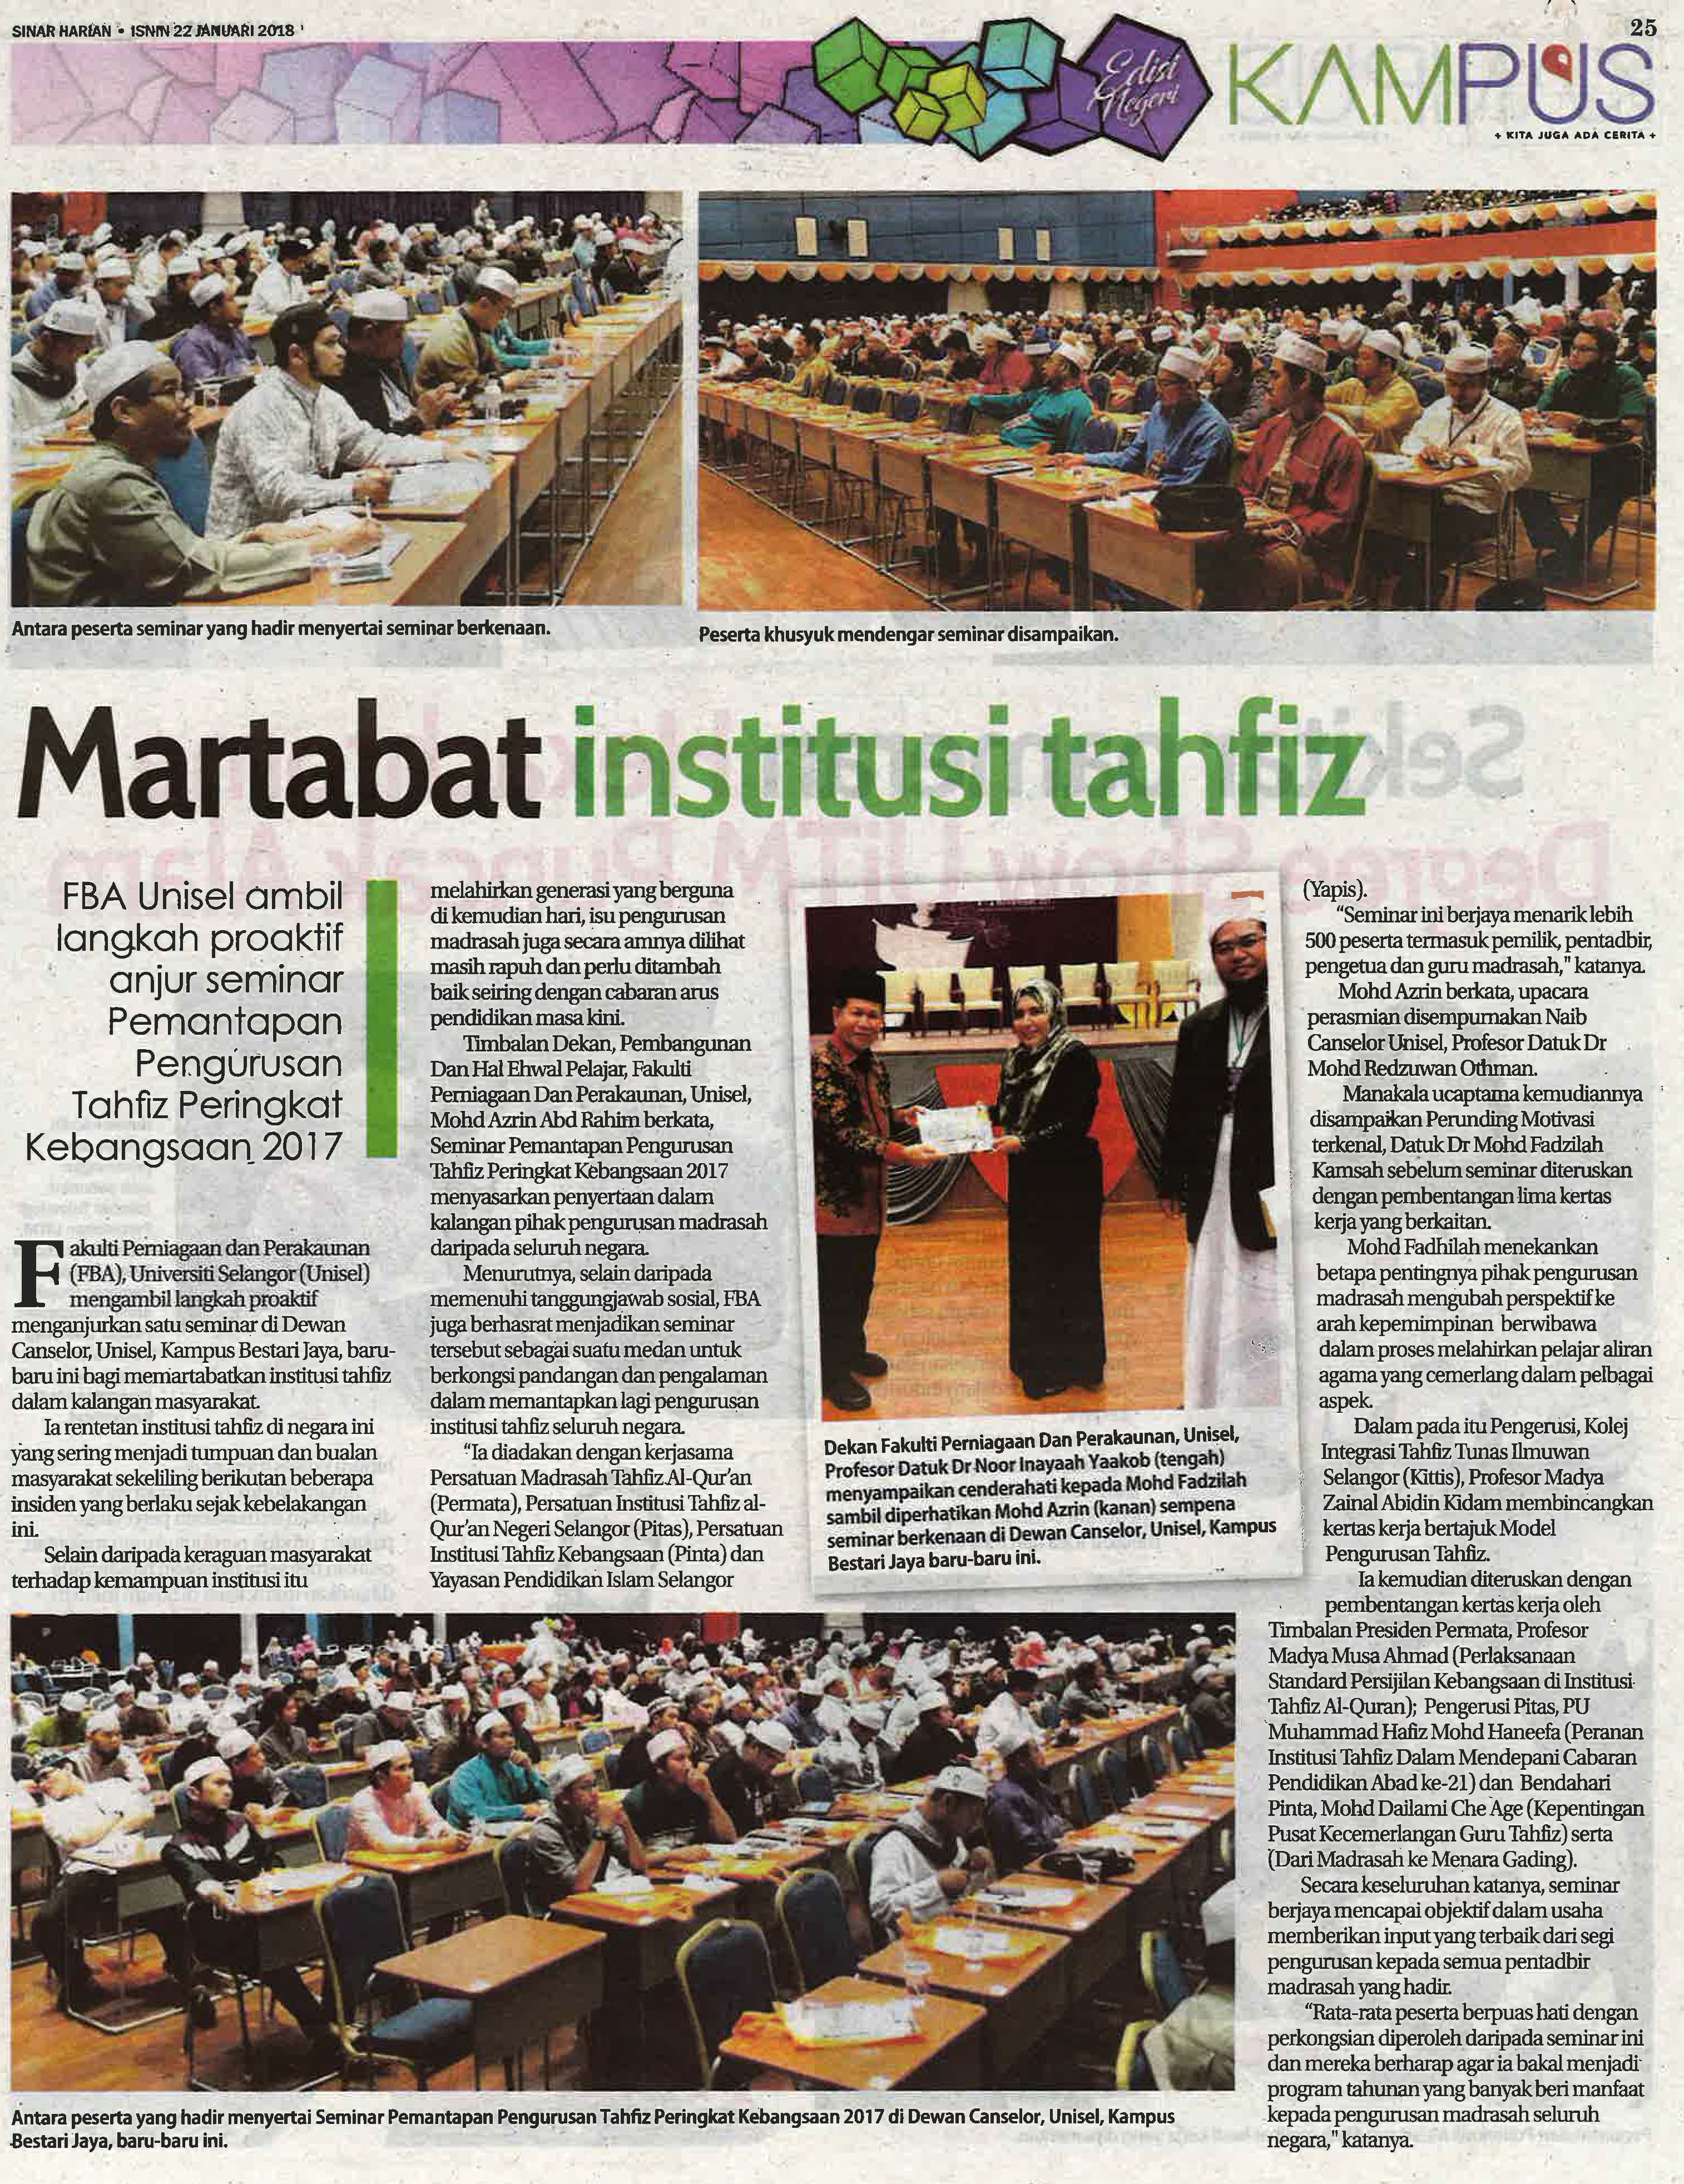 Martabat Institusi Tahfiz